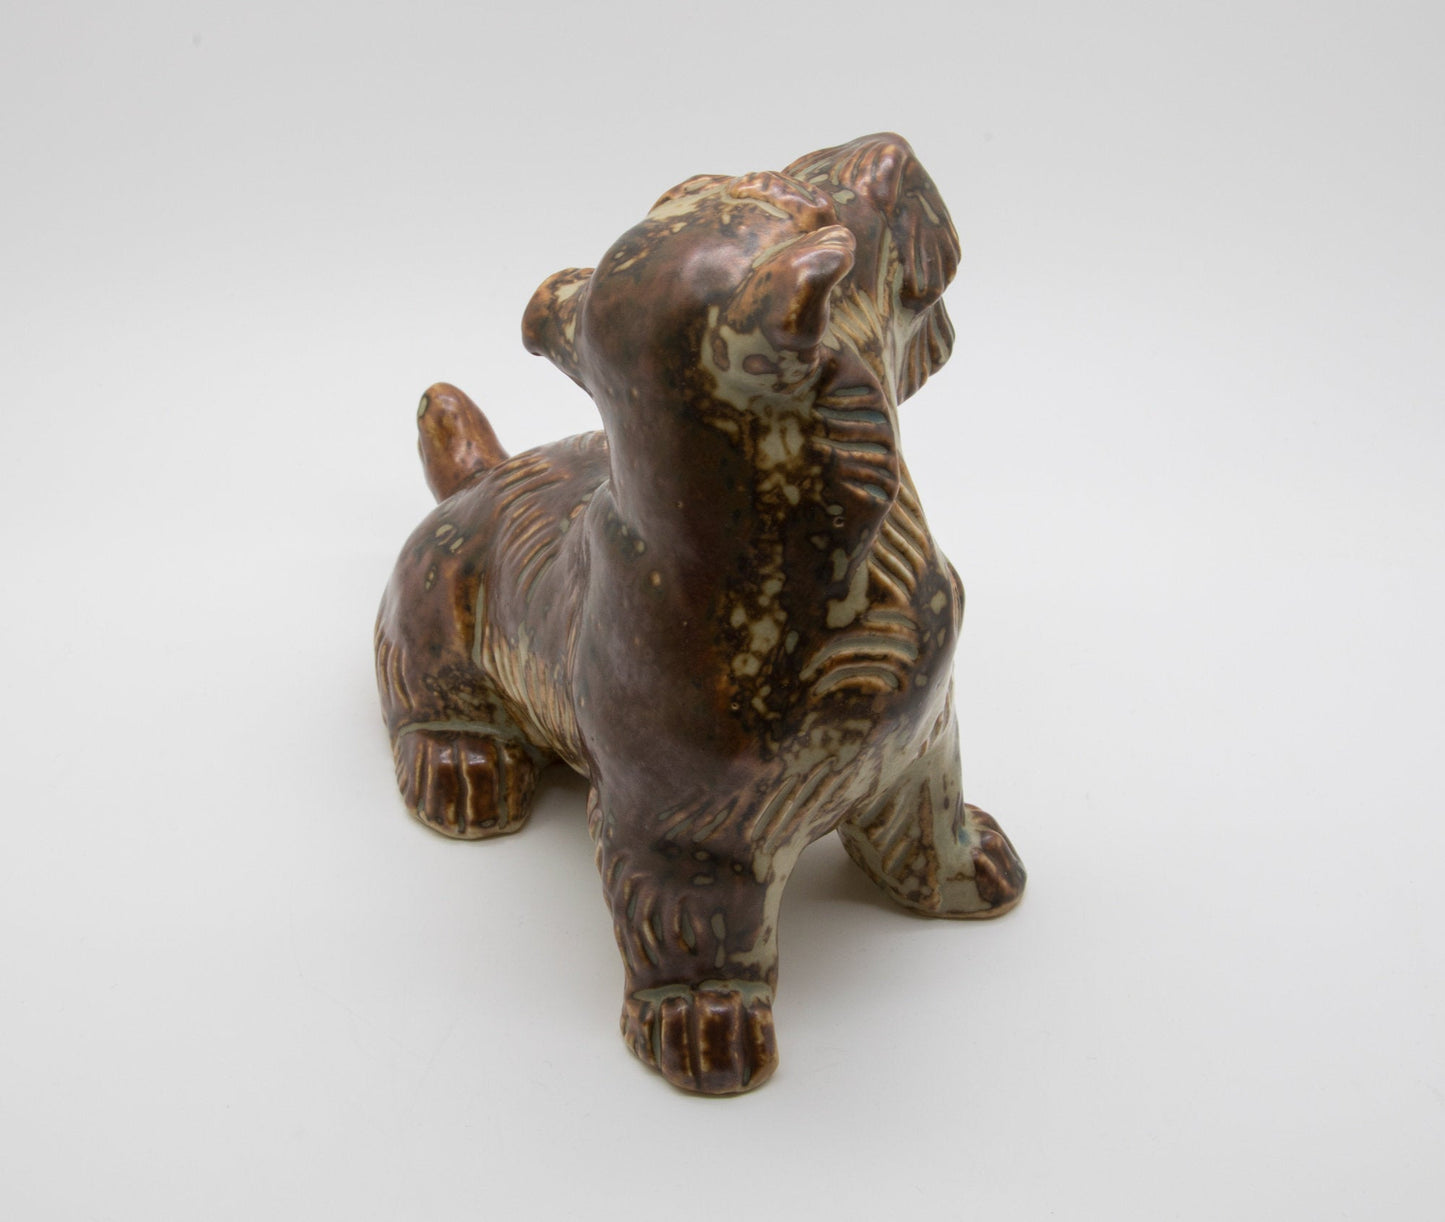 Royal Copenhagen KNUD KYHN Sung Glazed Stoneware Terrier Dog Figurine # 20129 Mollaris.com 